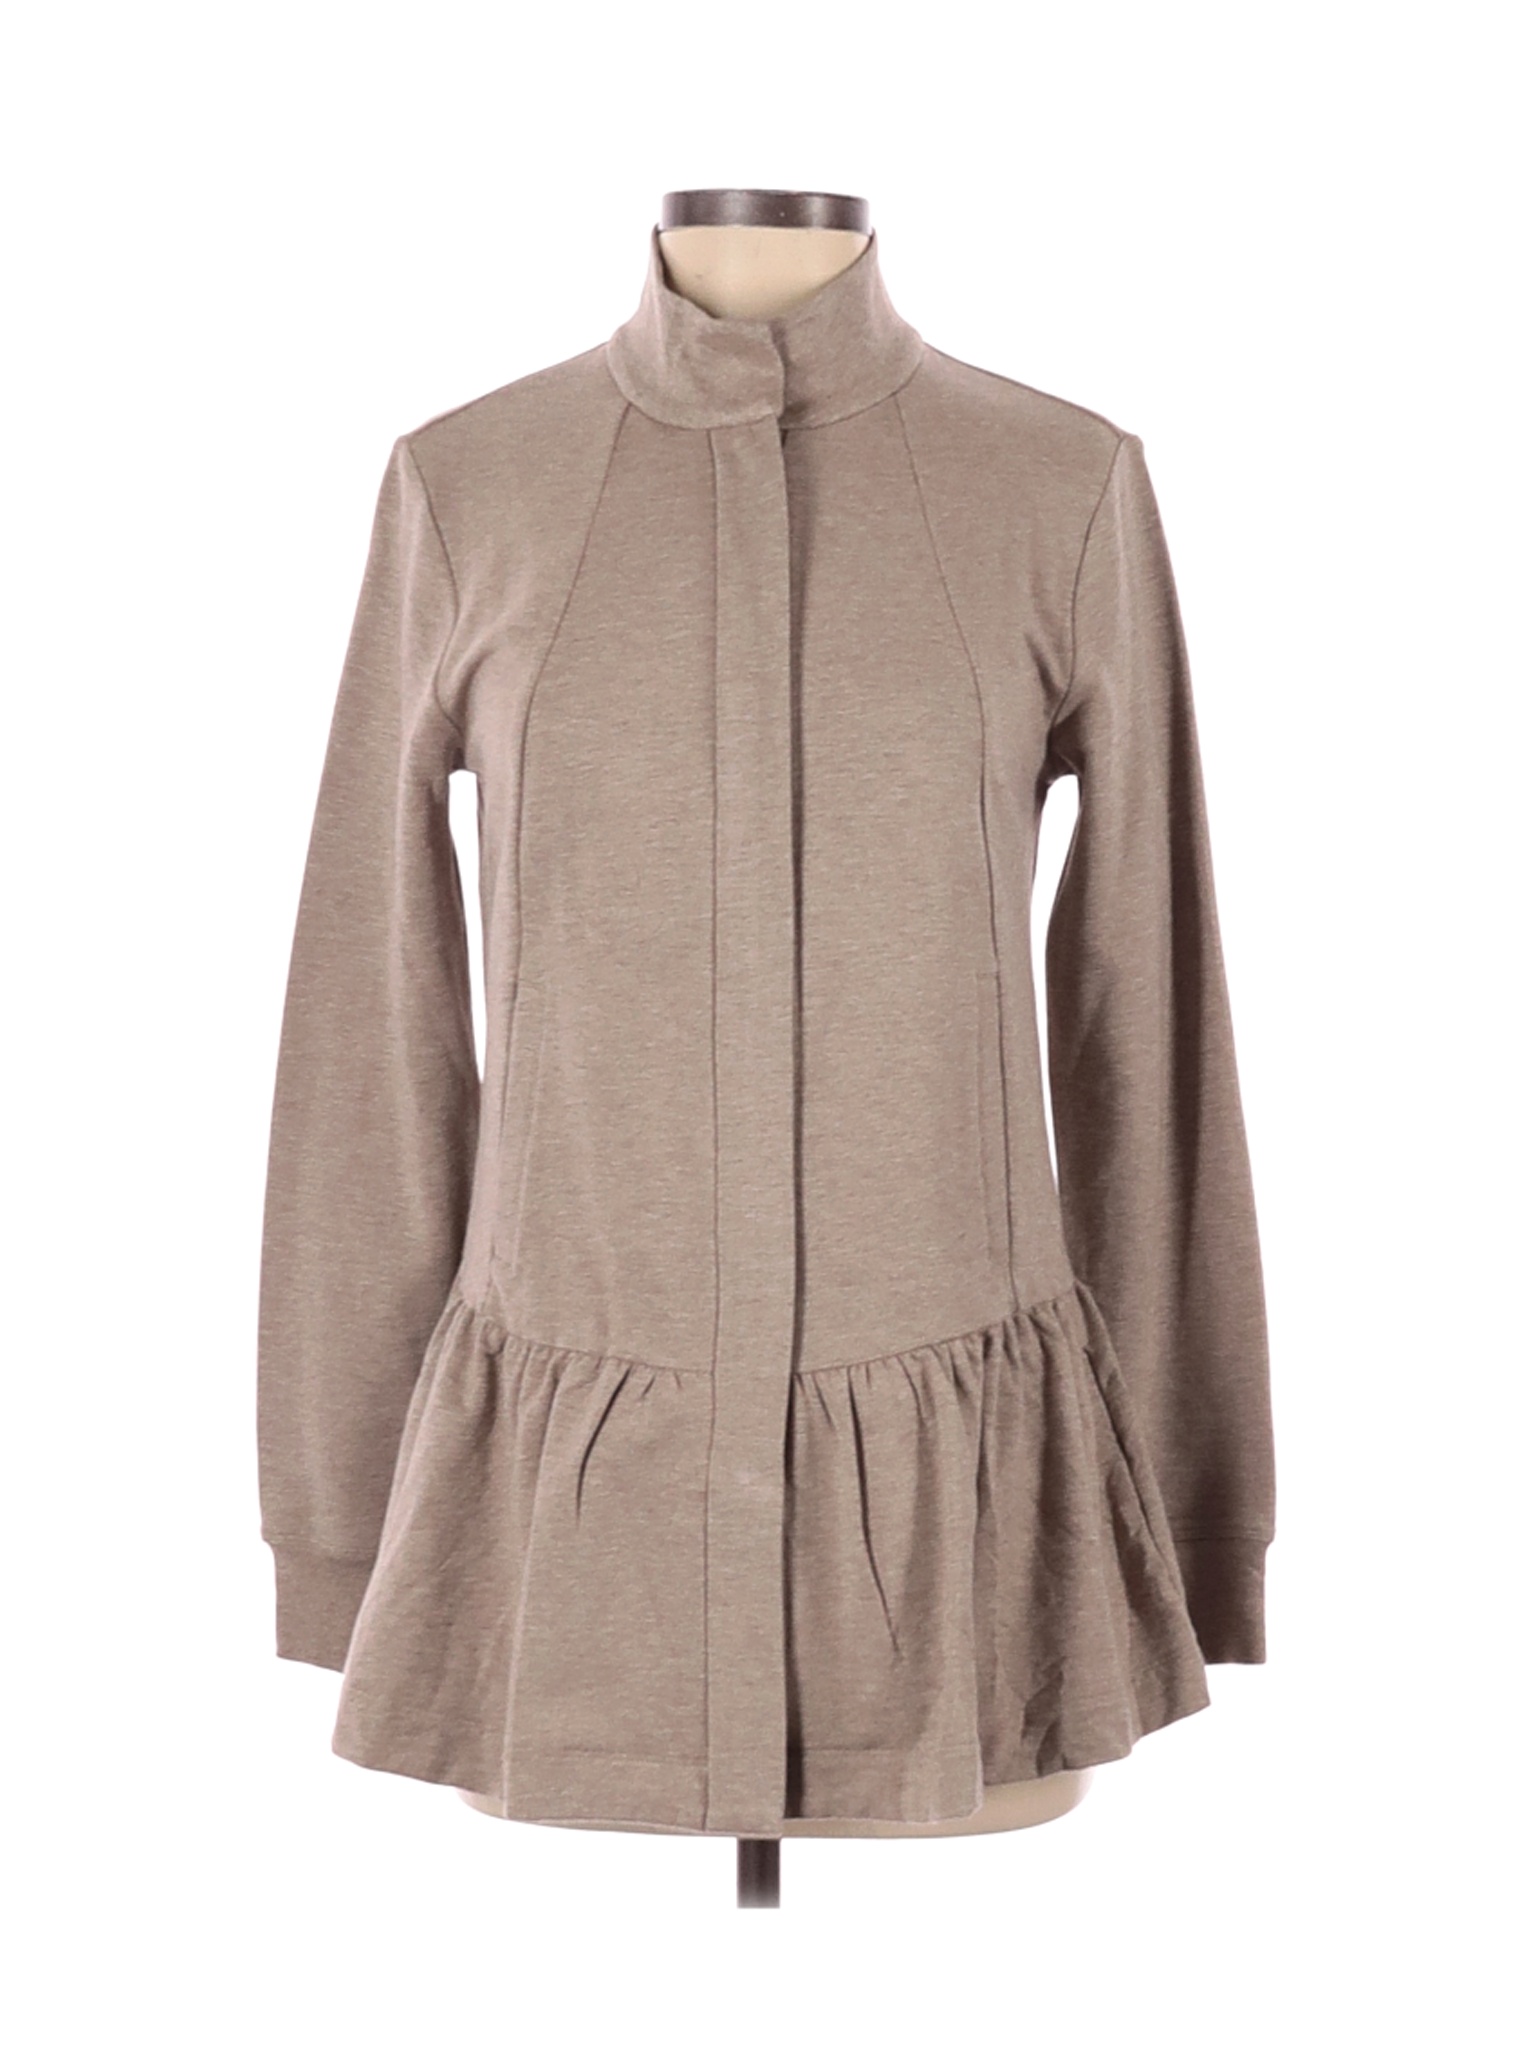 CAbi Women Brown Jacket XS | eBay